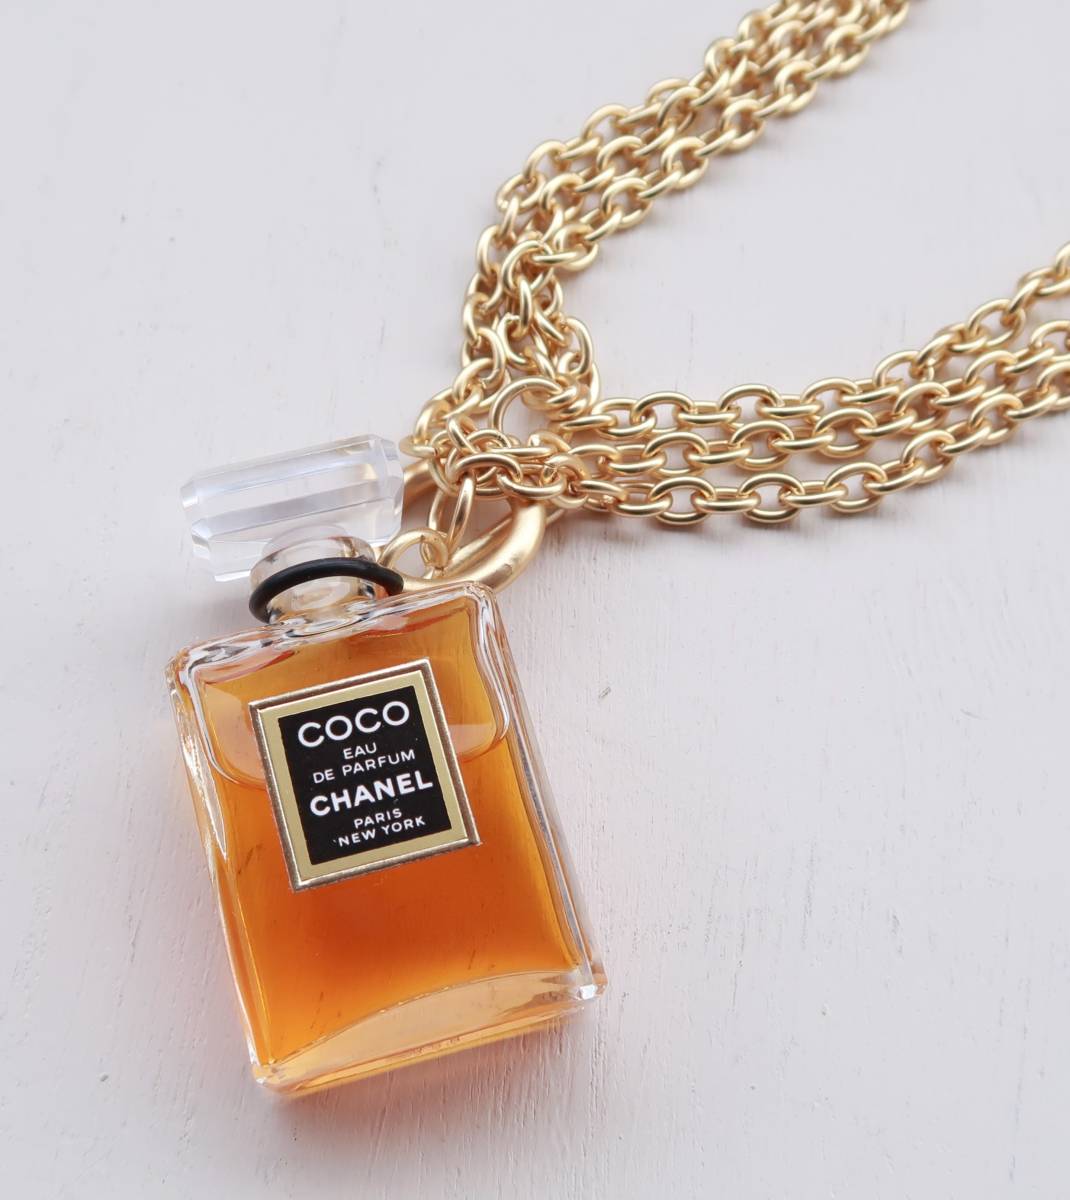  Chanel CHANEL COCO духи Mini бутылка цепь колье Gold кейс для украшений Vintage редкость прекрасный товар духи бутылка пуховка .-m